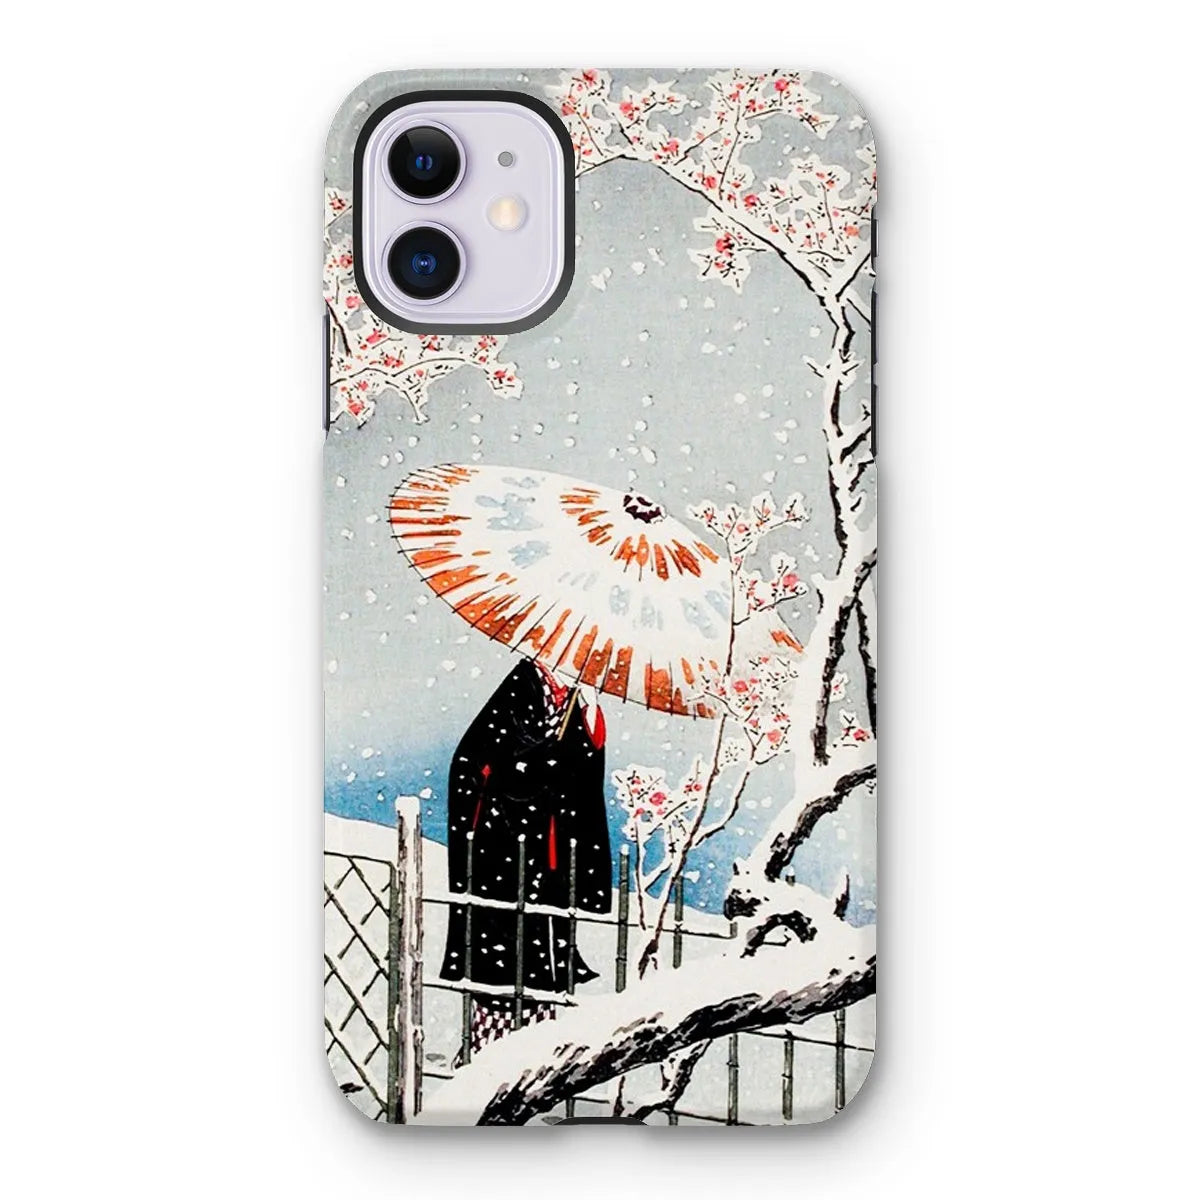 Plum Tree In Snow - Shin-hanga Phone Case - Hiroaki Takahashi - Iphone 11 / Matte - Mobile Phone Cases - Aesthetic Art